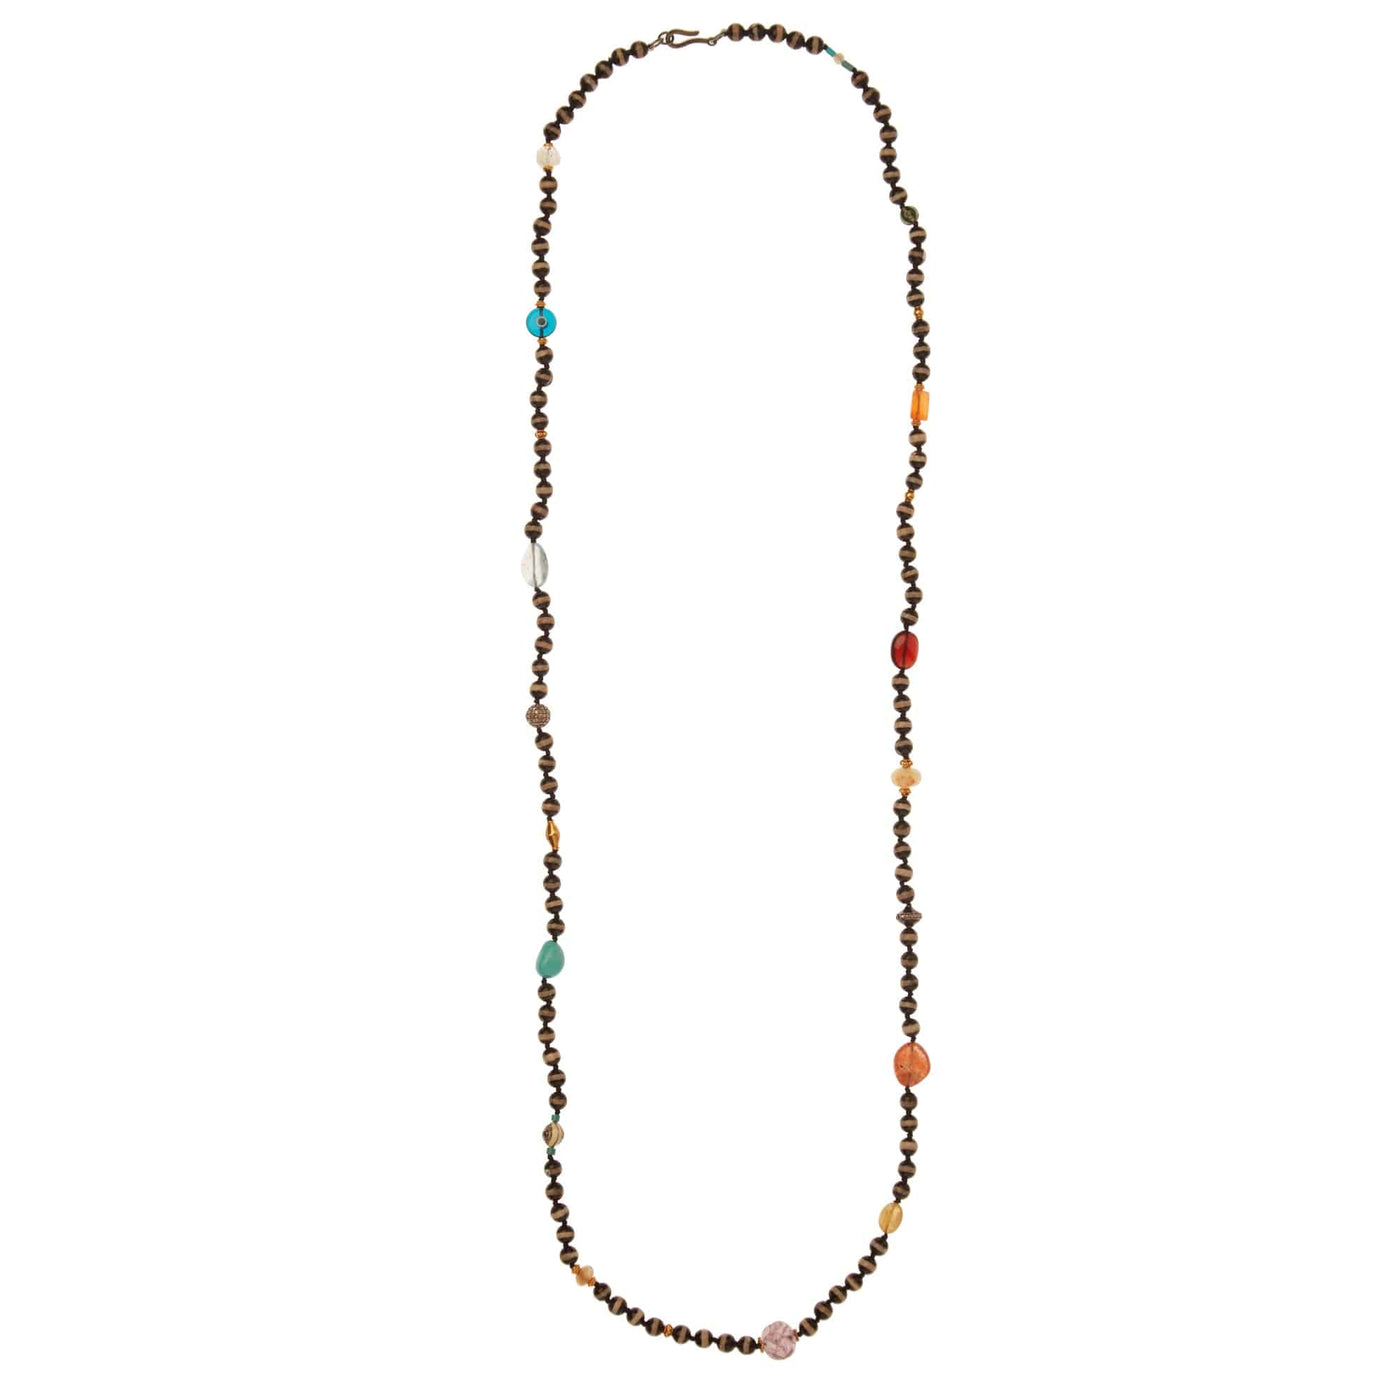 Black Agate Stripe Necklace 41 (100cm) - Globetrotter - Ileana Makri store